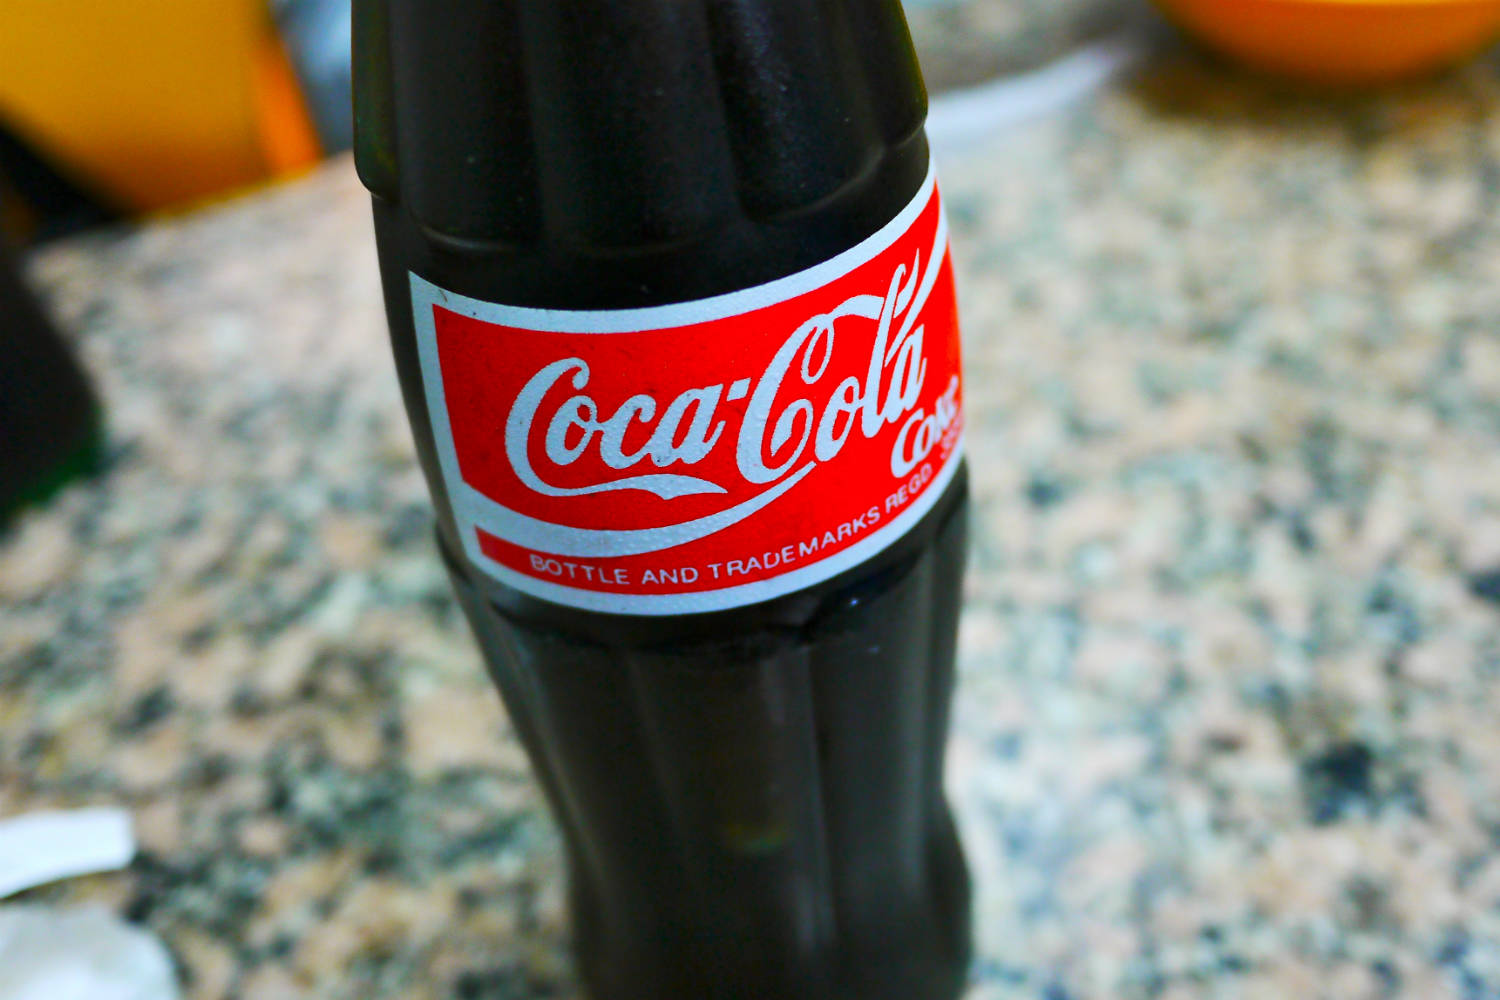 A glass Coca-Cola bottle. Photo by Edwin Leong, via Wikimedia Commons